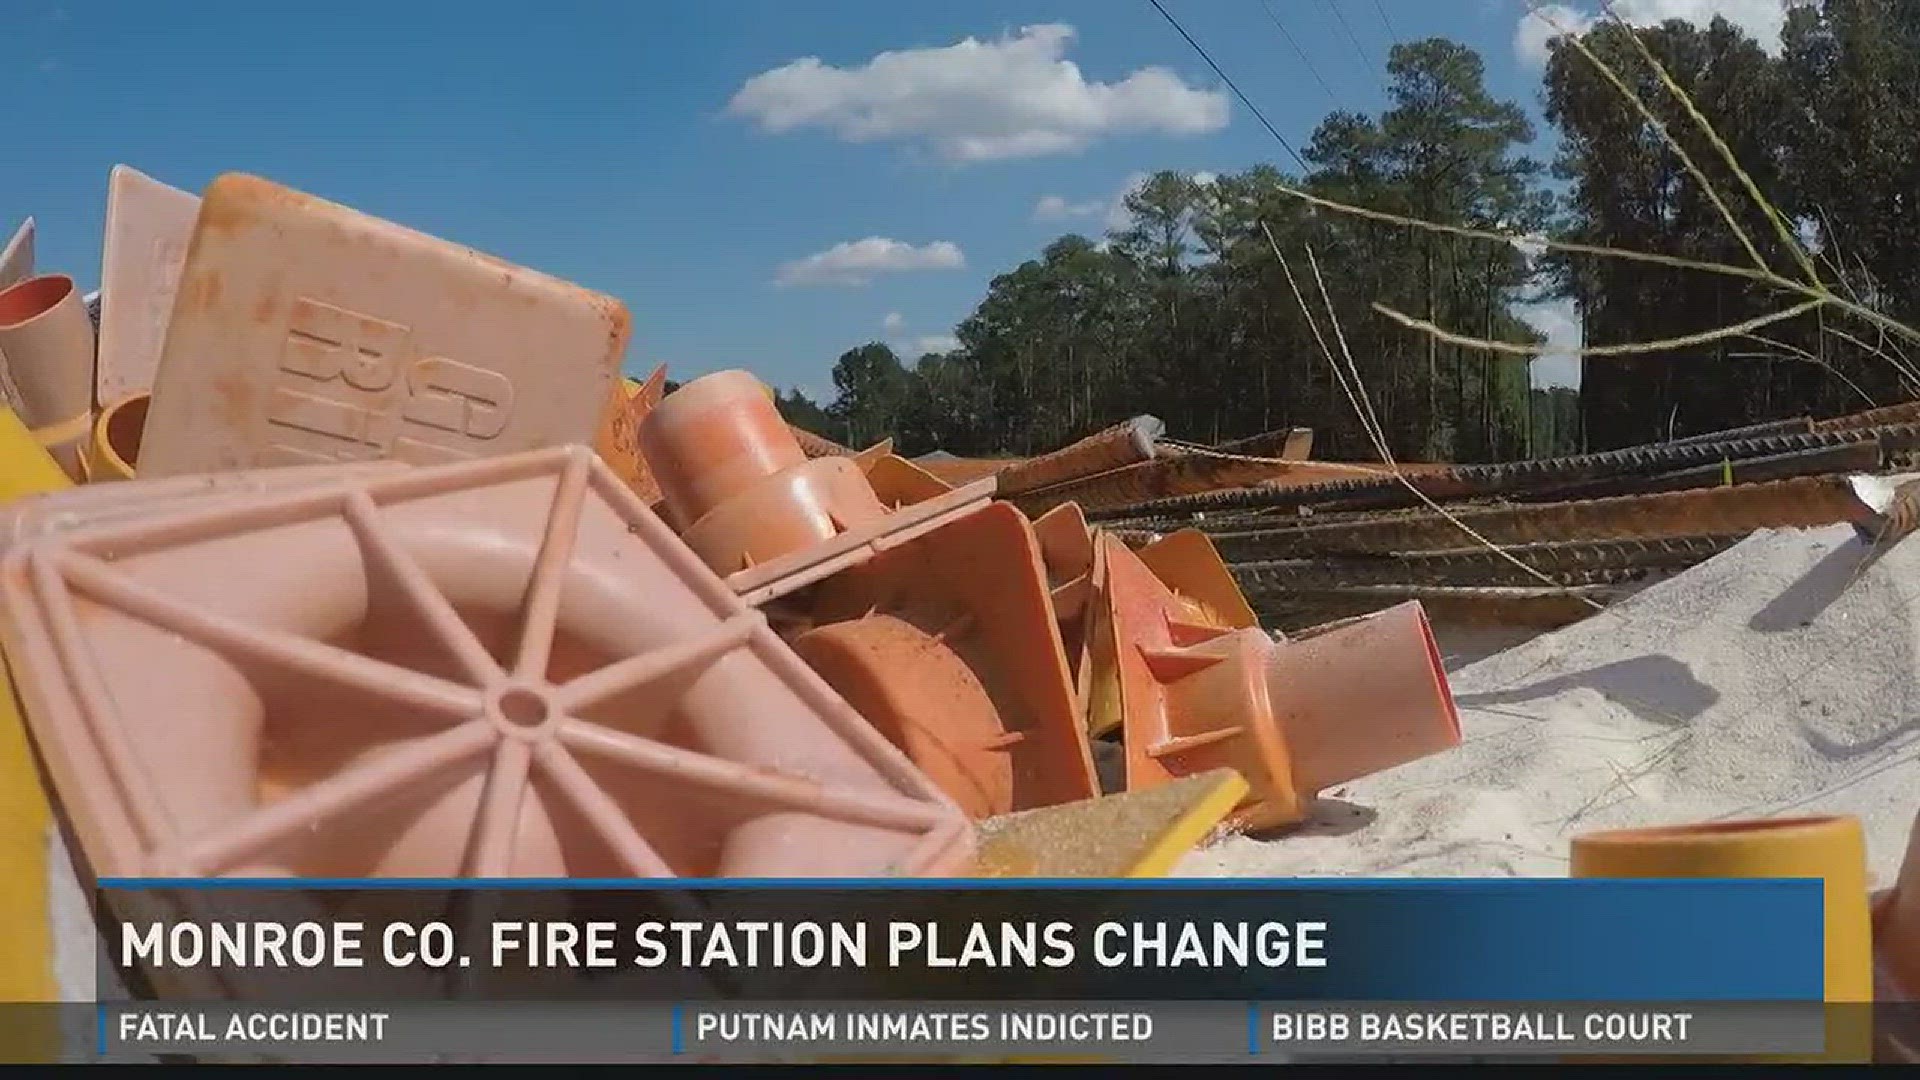 Monroe Co. fire station plans change